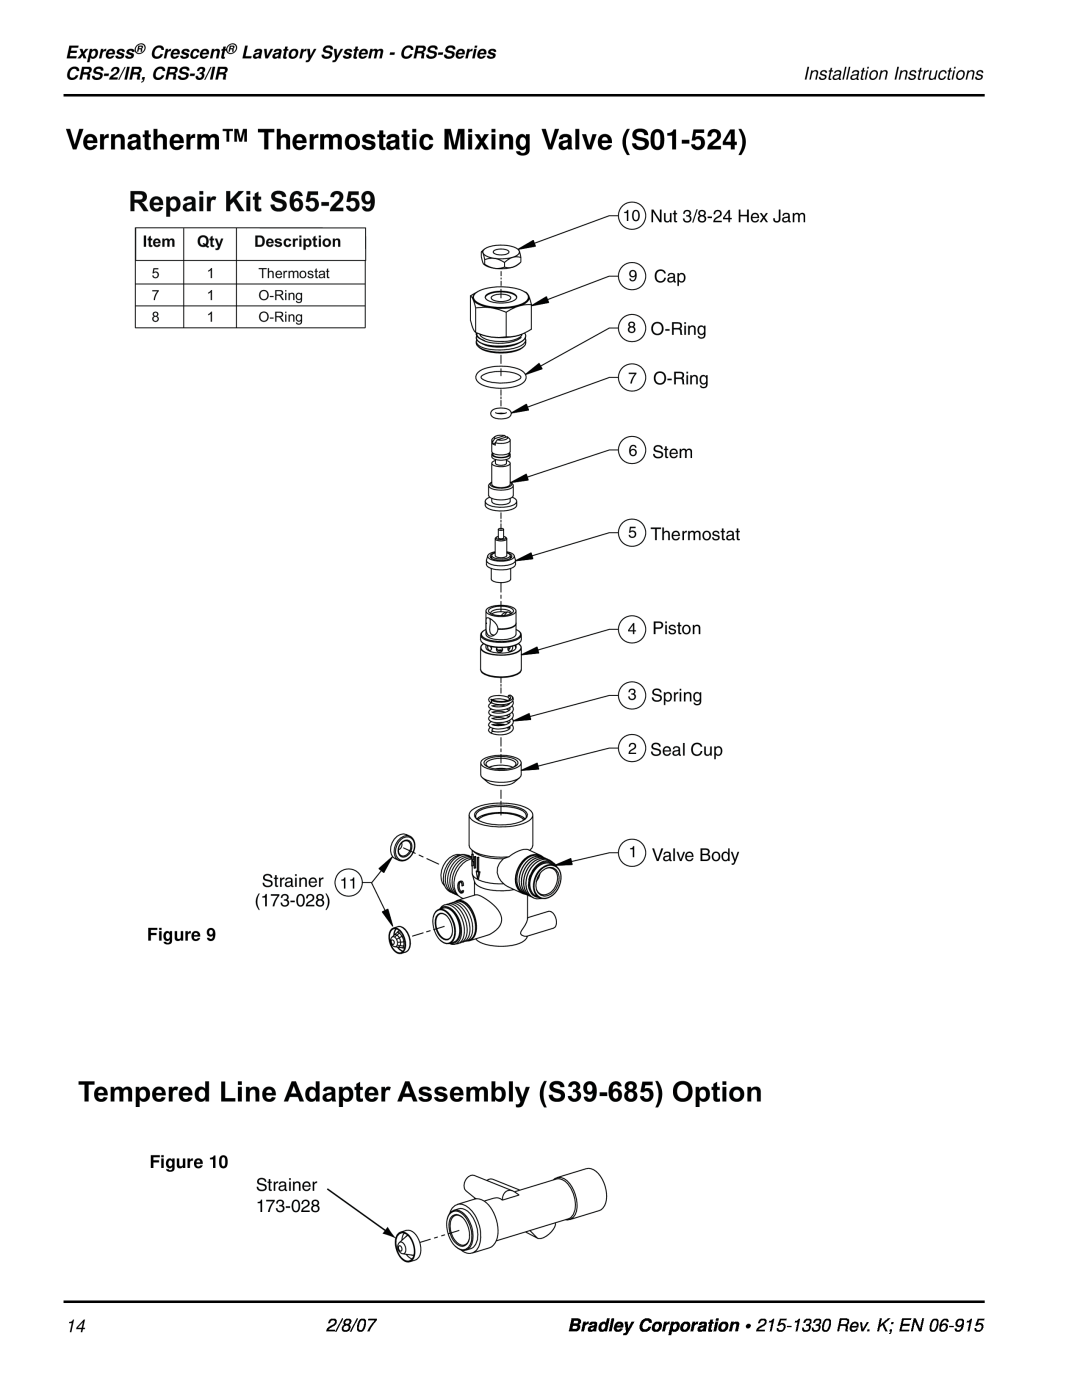 Bradley Smoker Vernatherm Thermostatic Mixing Valve S01-524, Repair Kit S65-259, CRS-2/IR, CRS-3/IR, Strainer 11, 9 Cap 